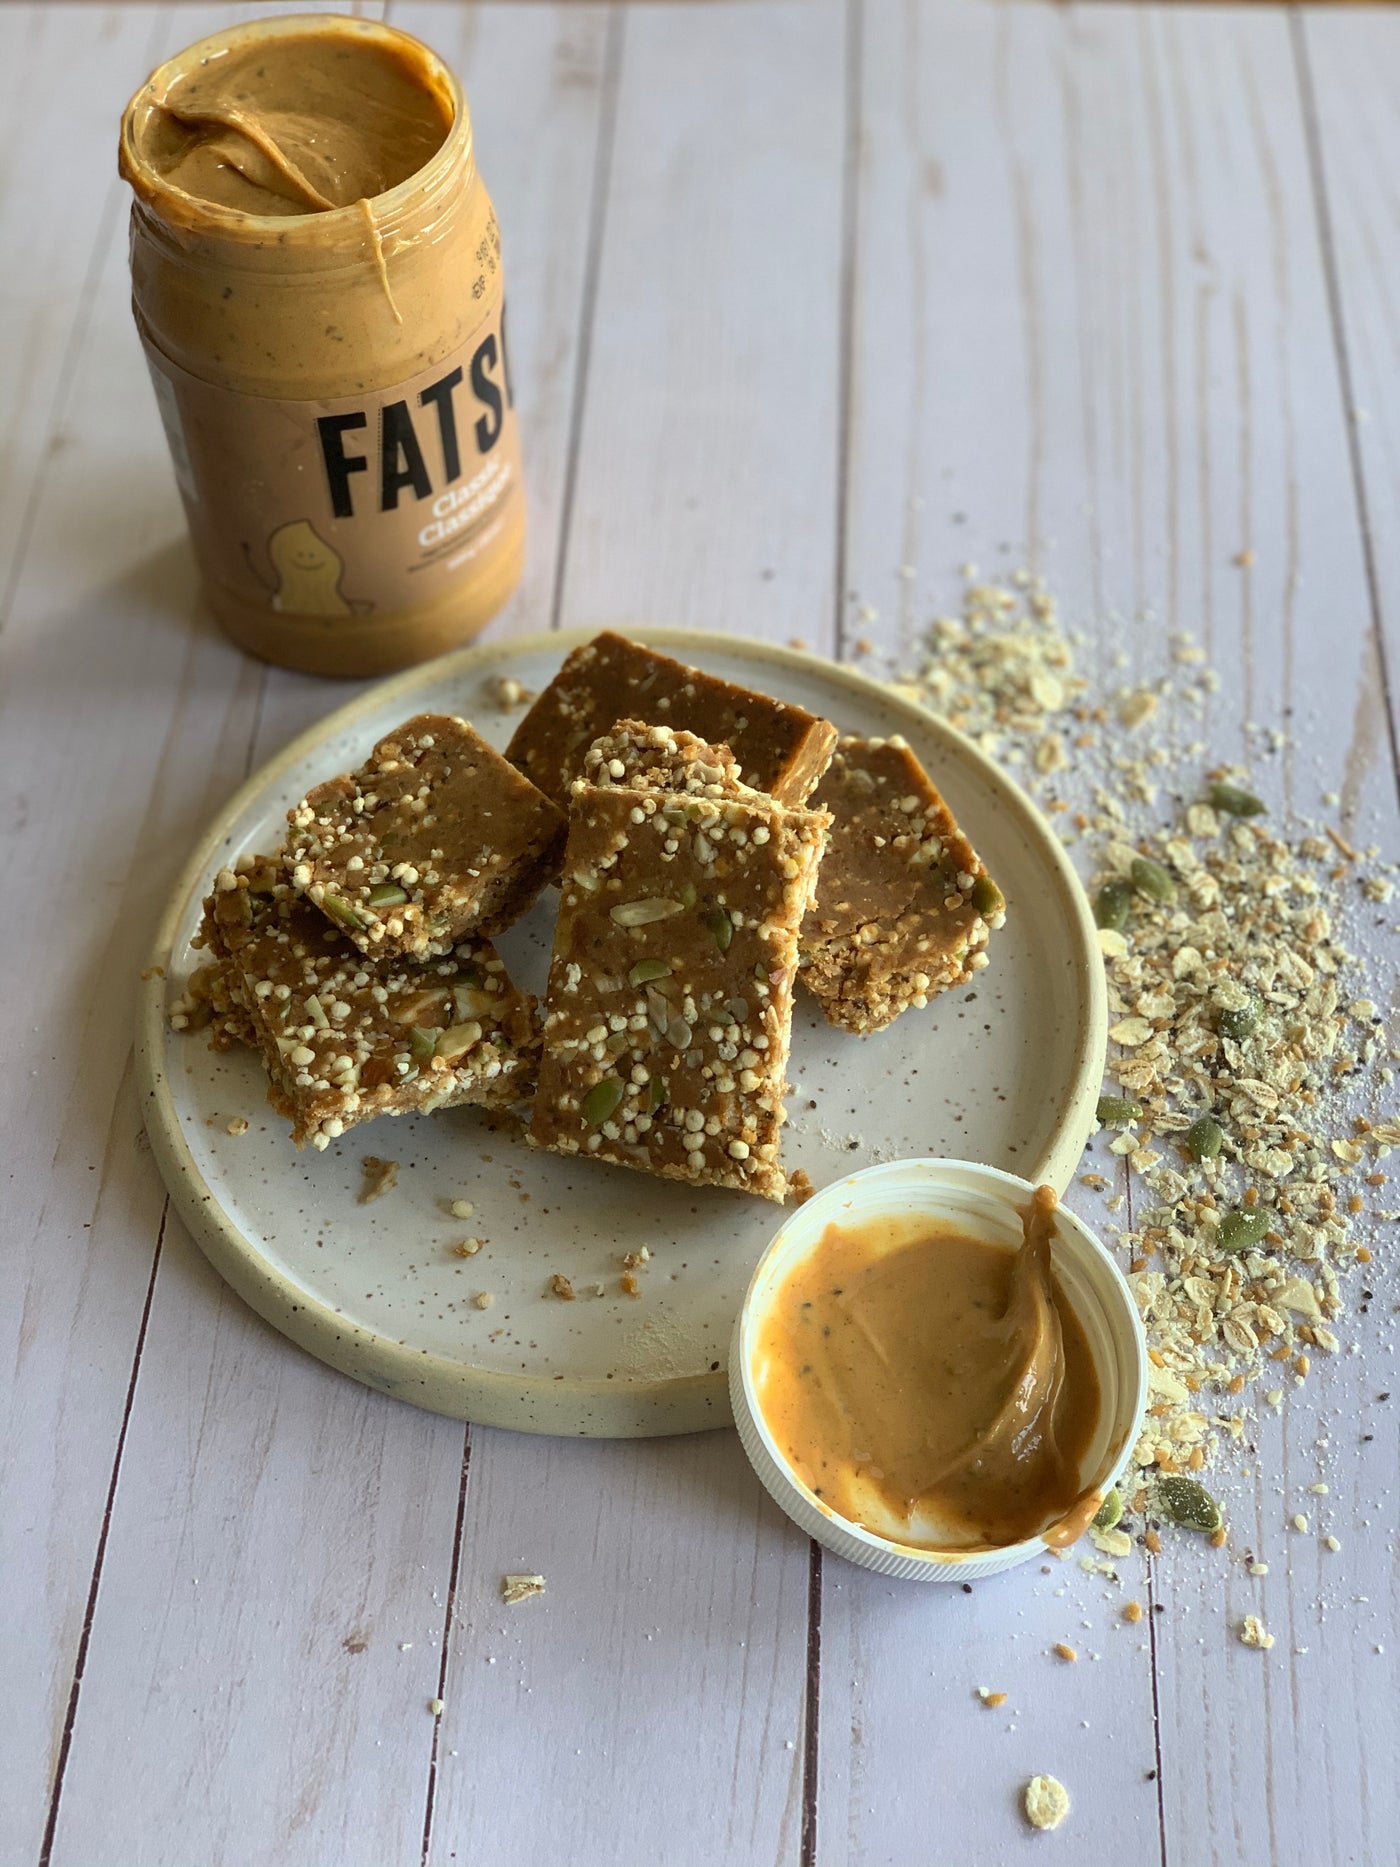 Puffed Quinoa, Date and Fatso Bars